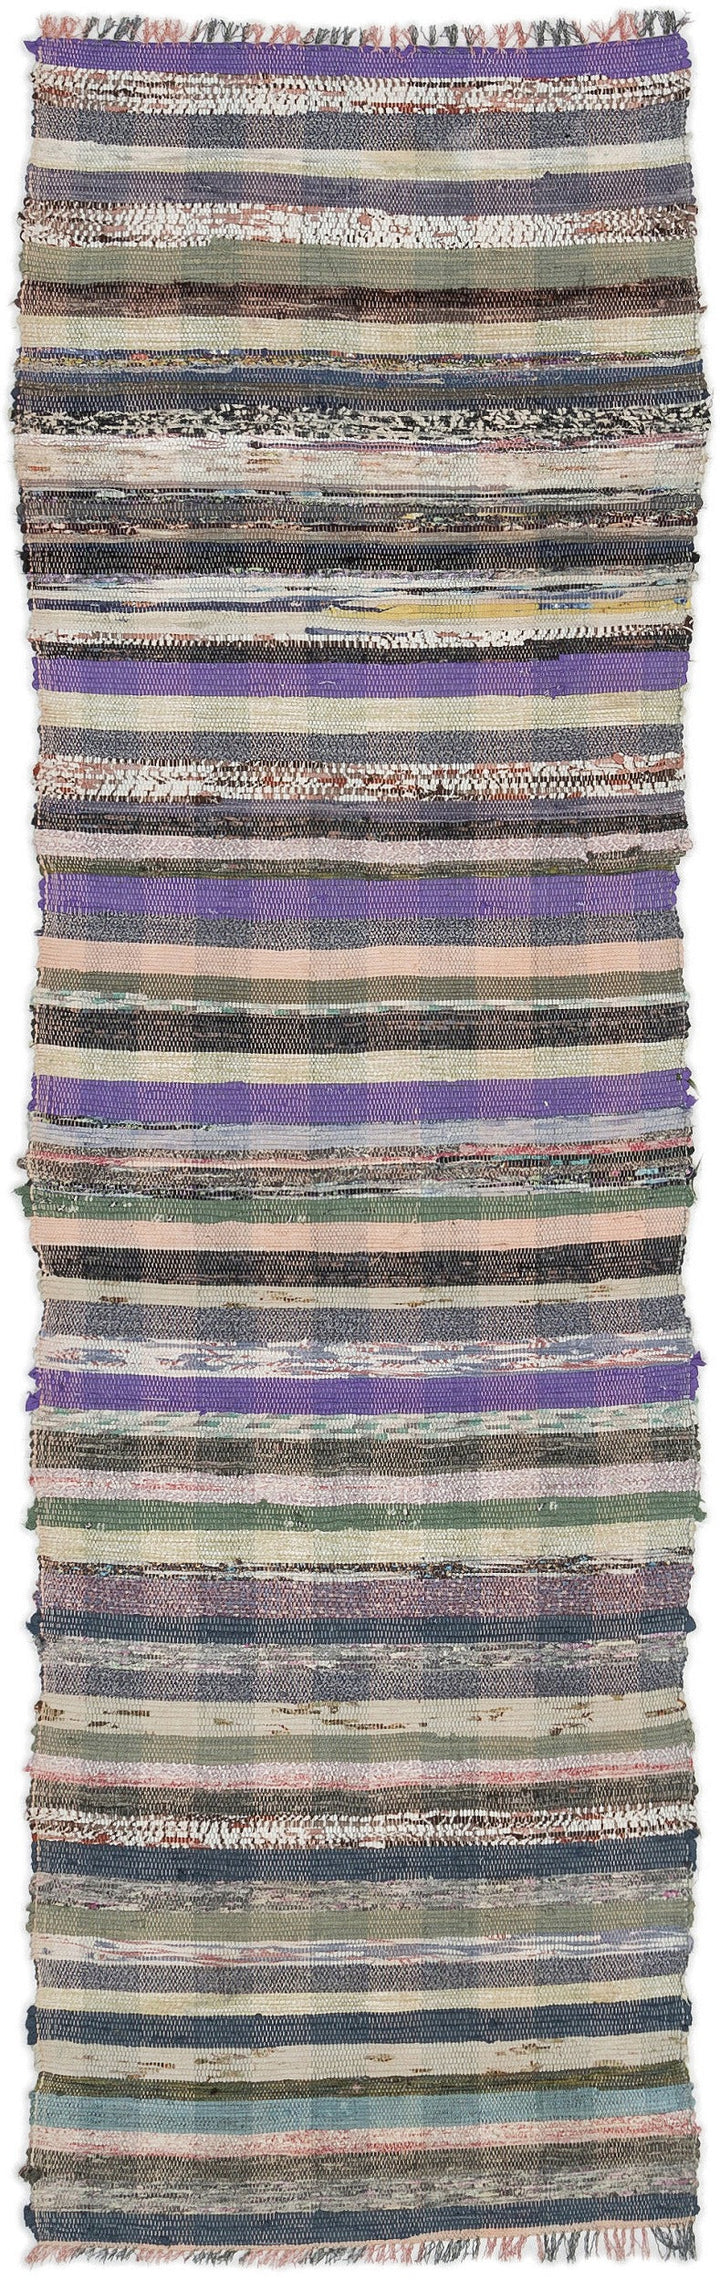 Cretan Gray Striped Wool Hand-Woven Carpet 065 x 216